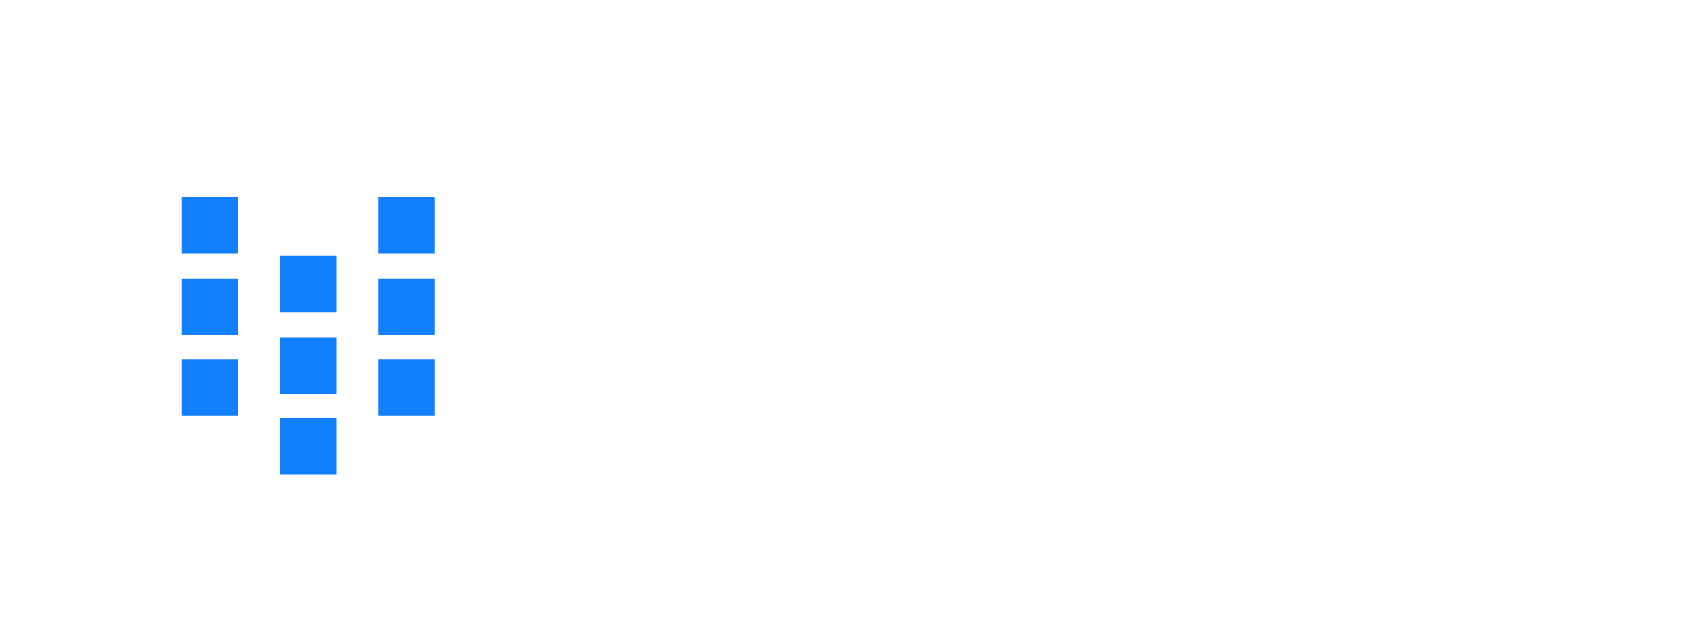 Appcast Logo